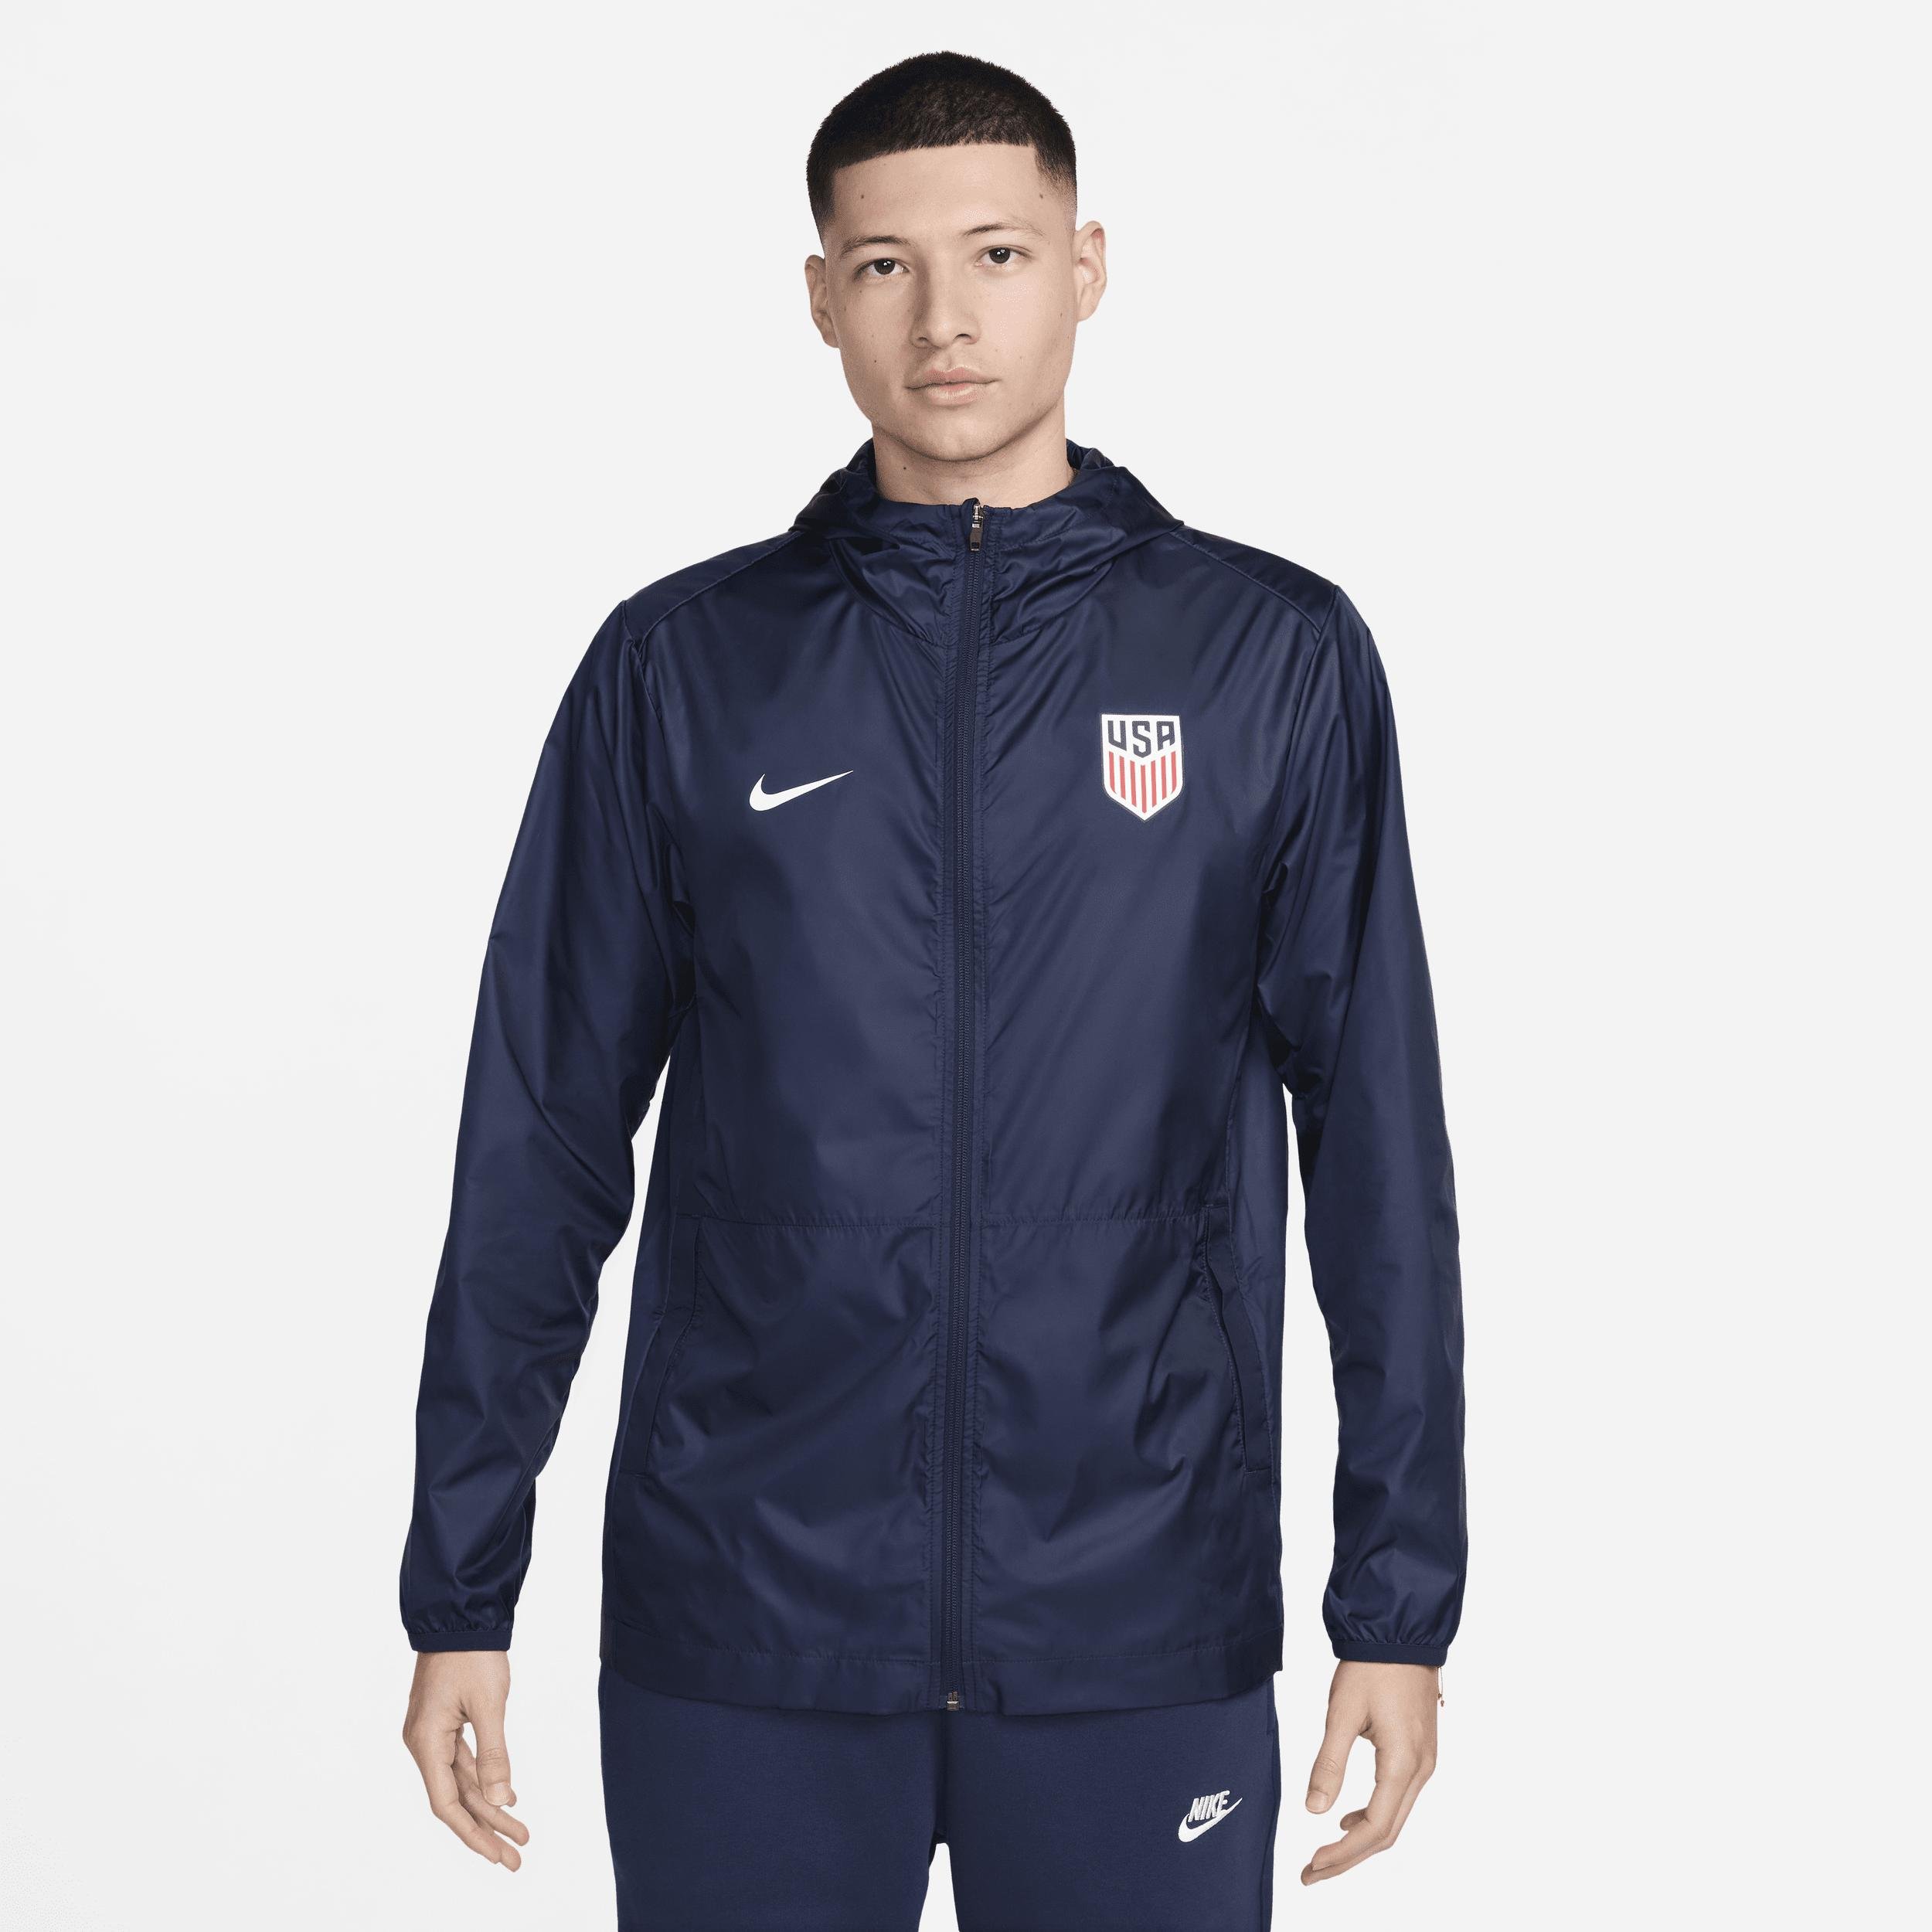 USMNT Academy Pro Nike Men's Soccer Hooded Rain Jacket by NIKE